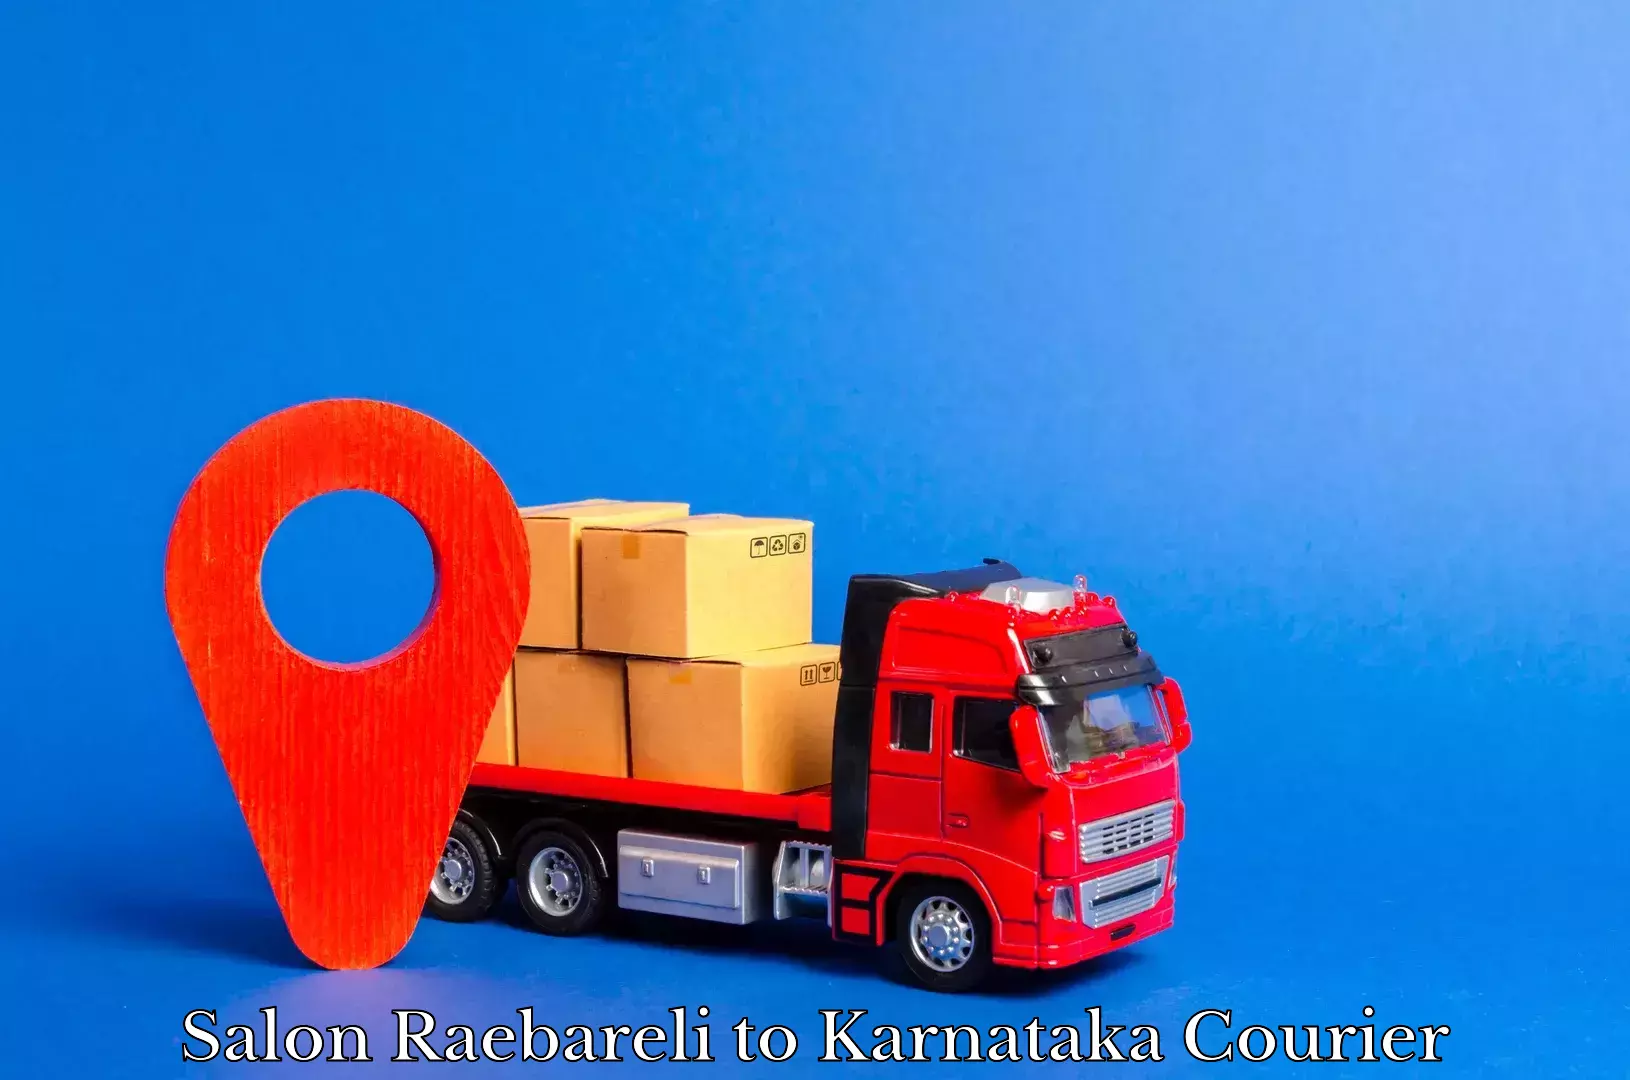 Cash on delivery service in Salon Raebareli to Karnataka